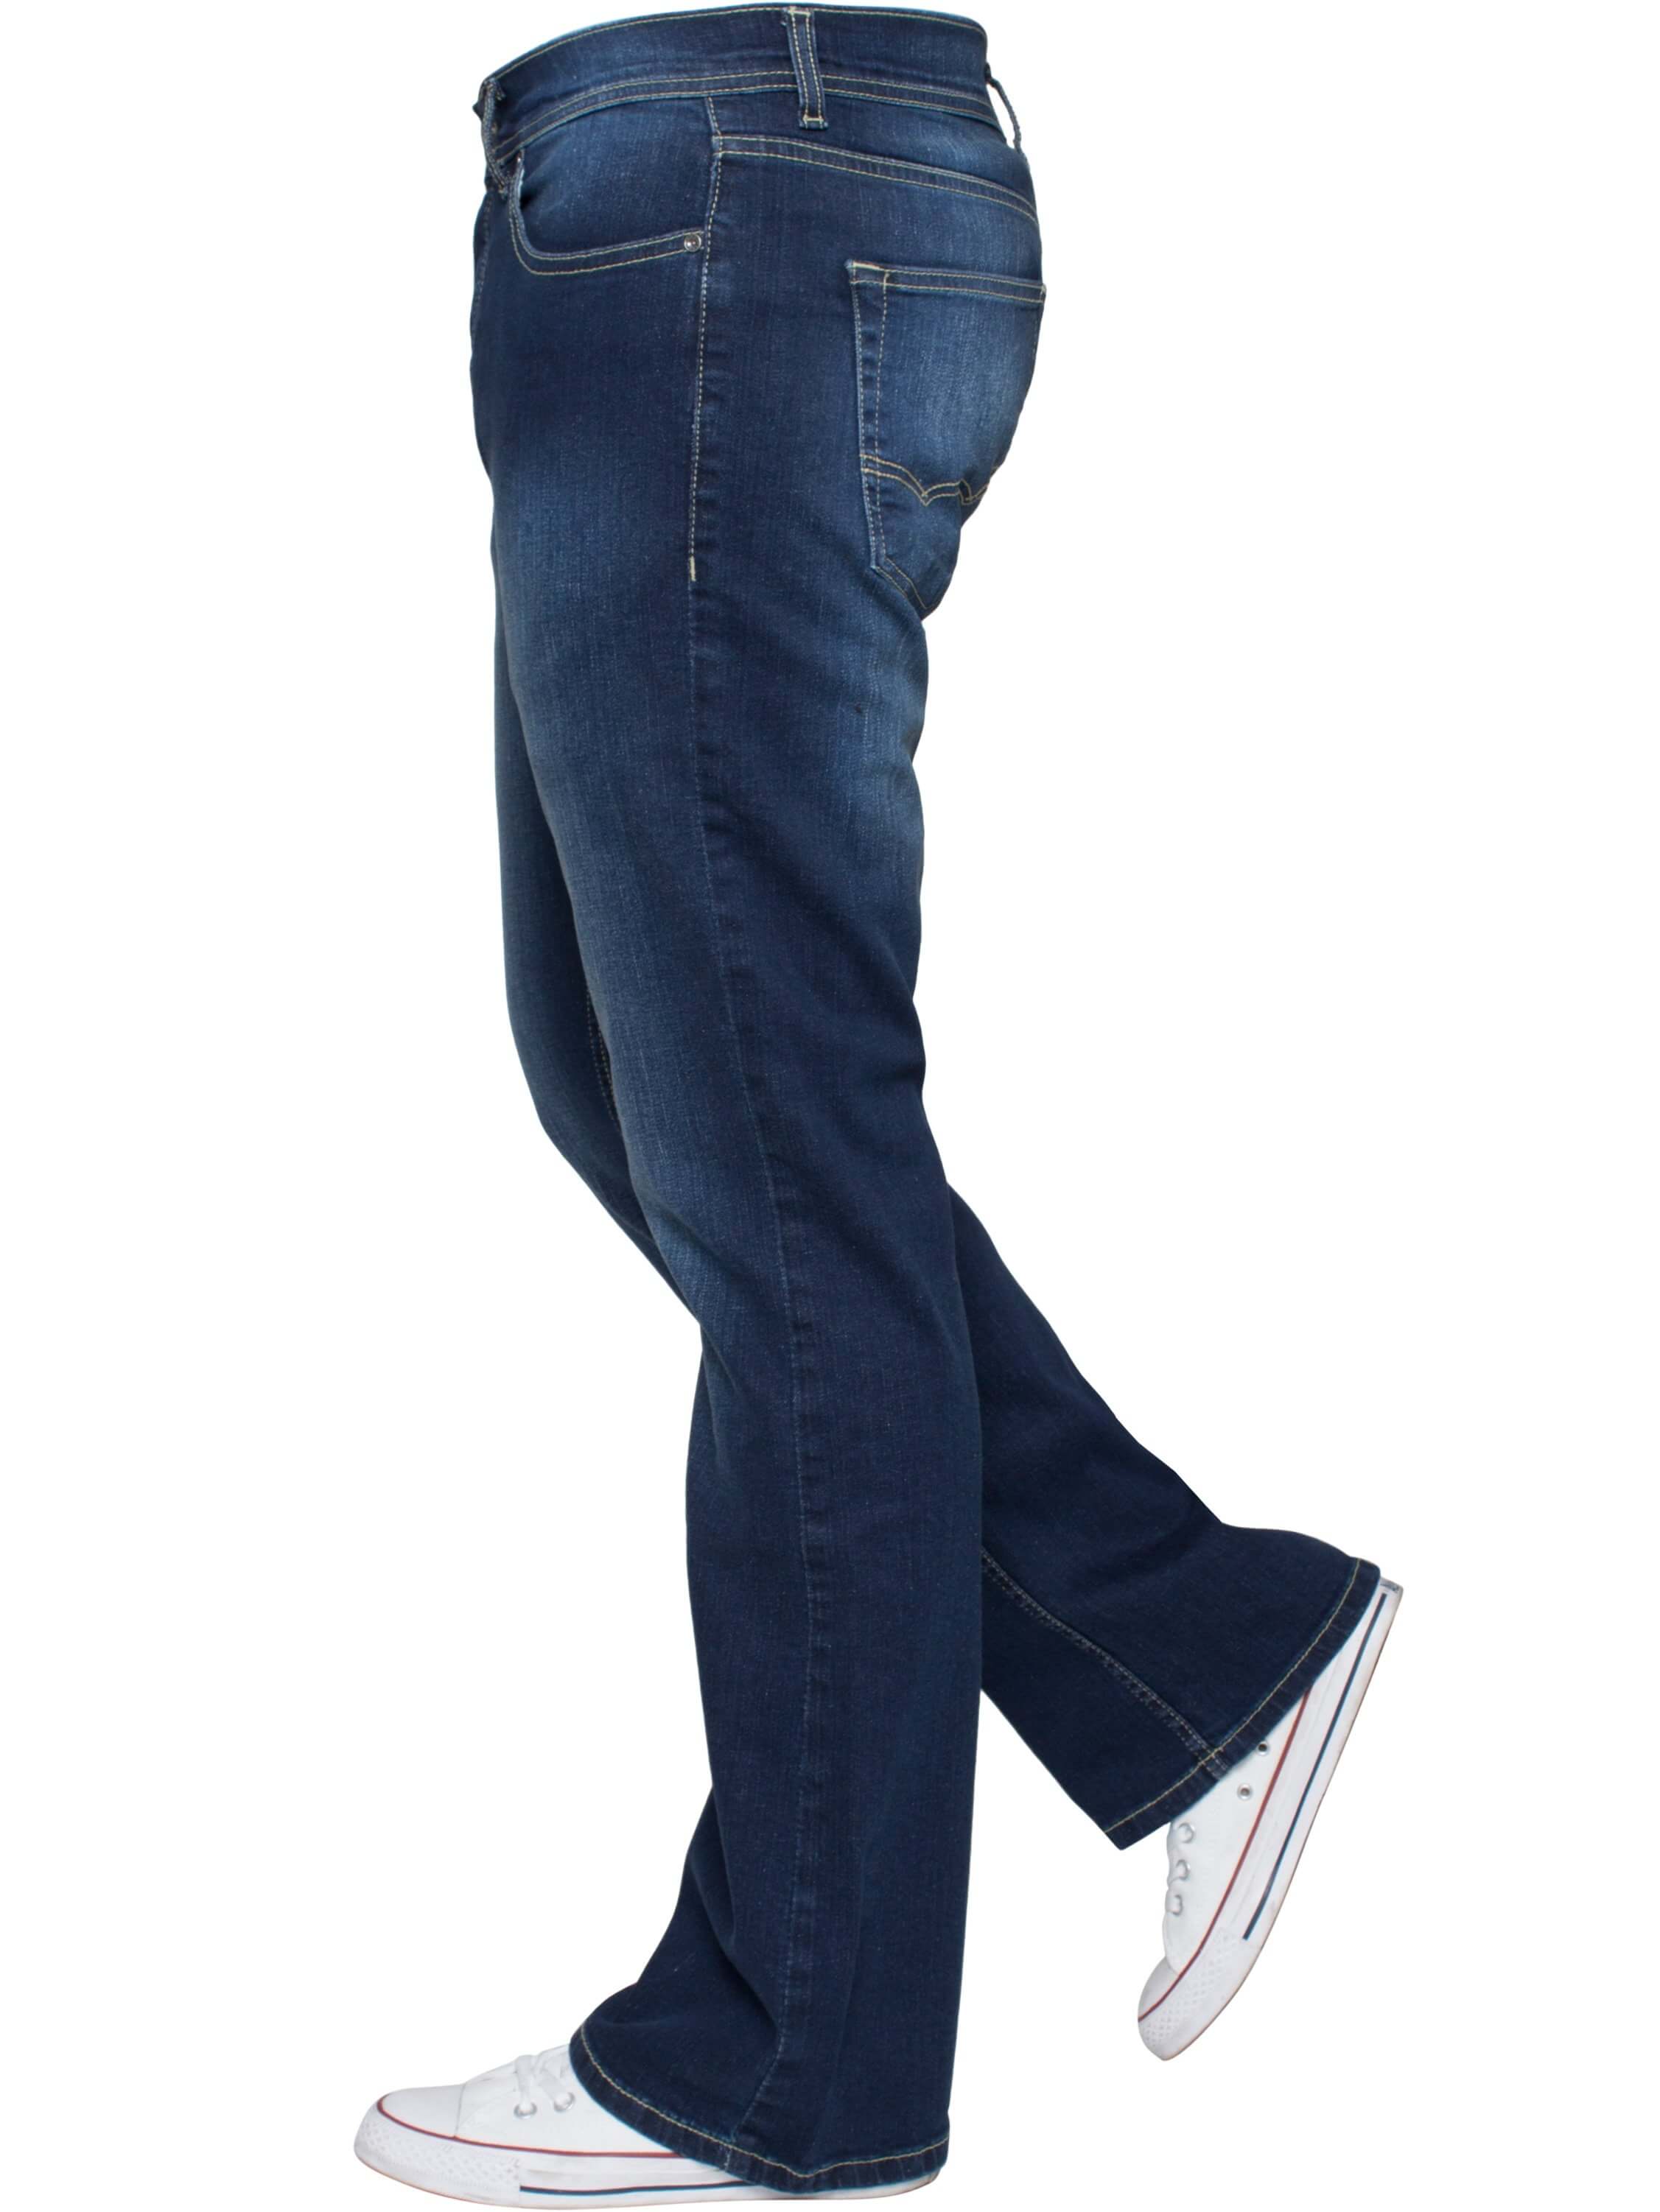 Enzo Mid Wash Flare Jeans - Spirit Clothing